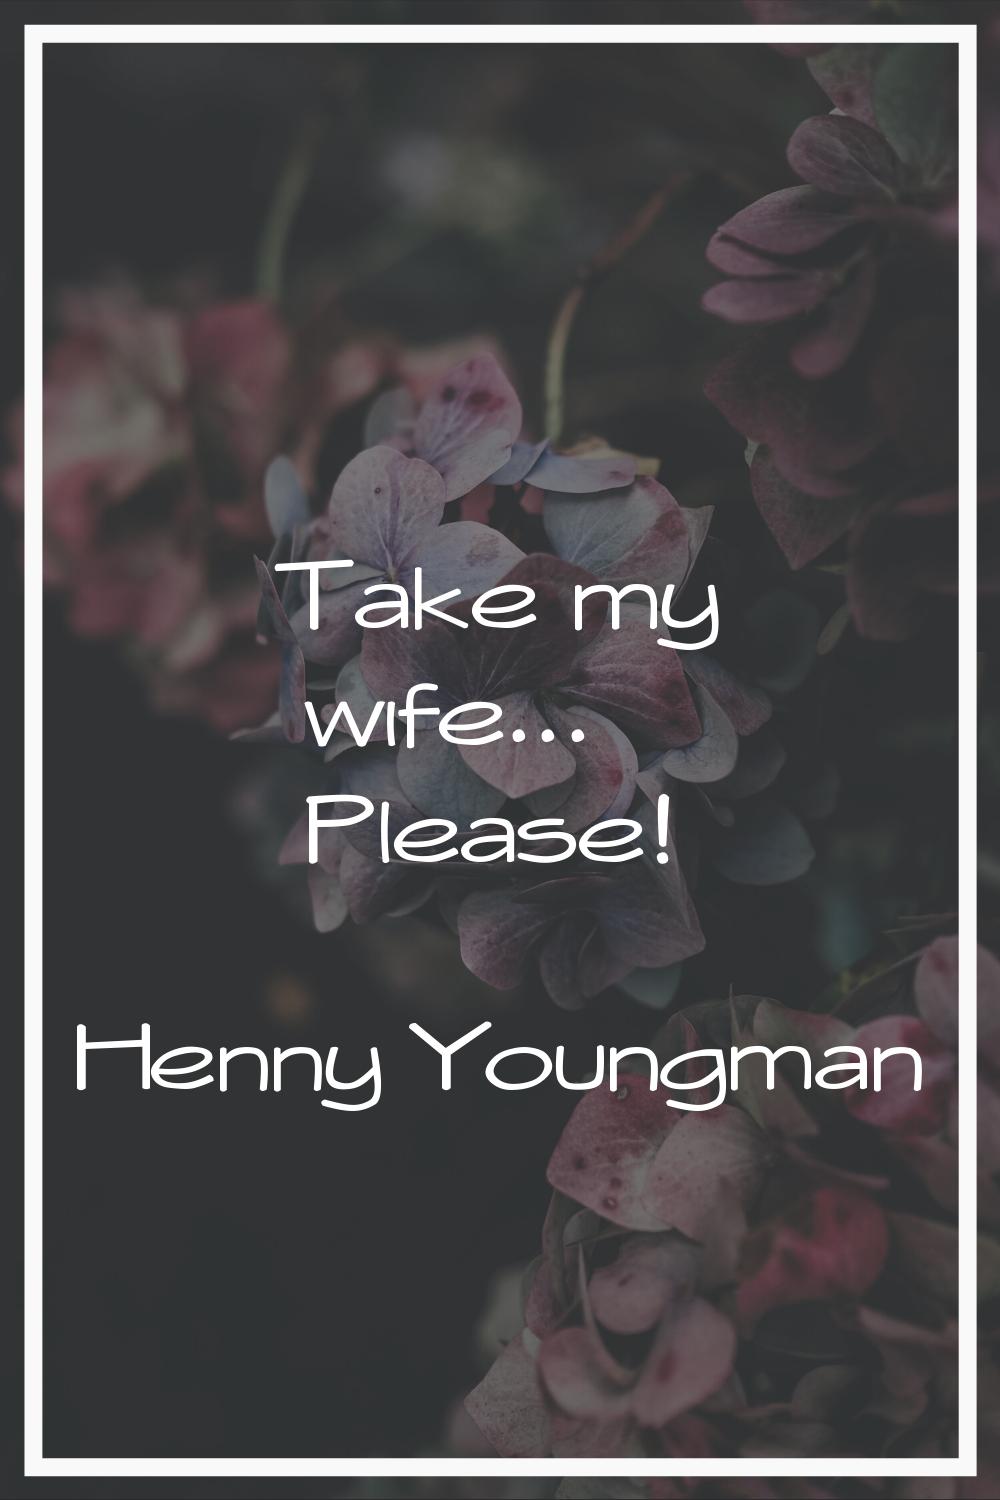 Take my wife... Please!